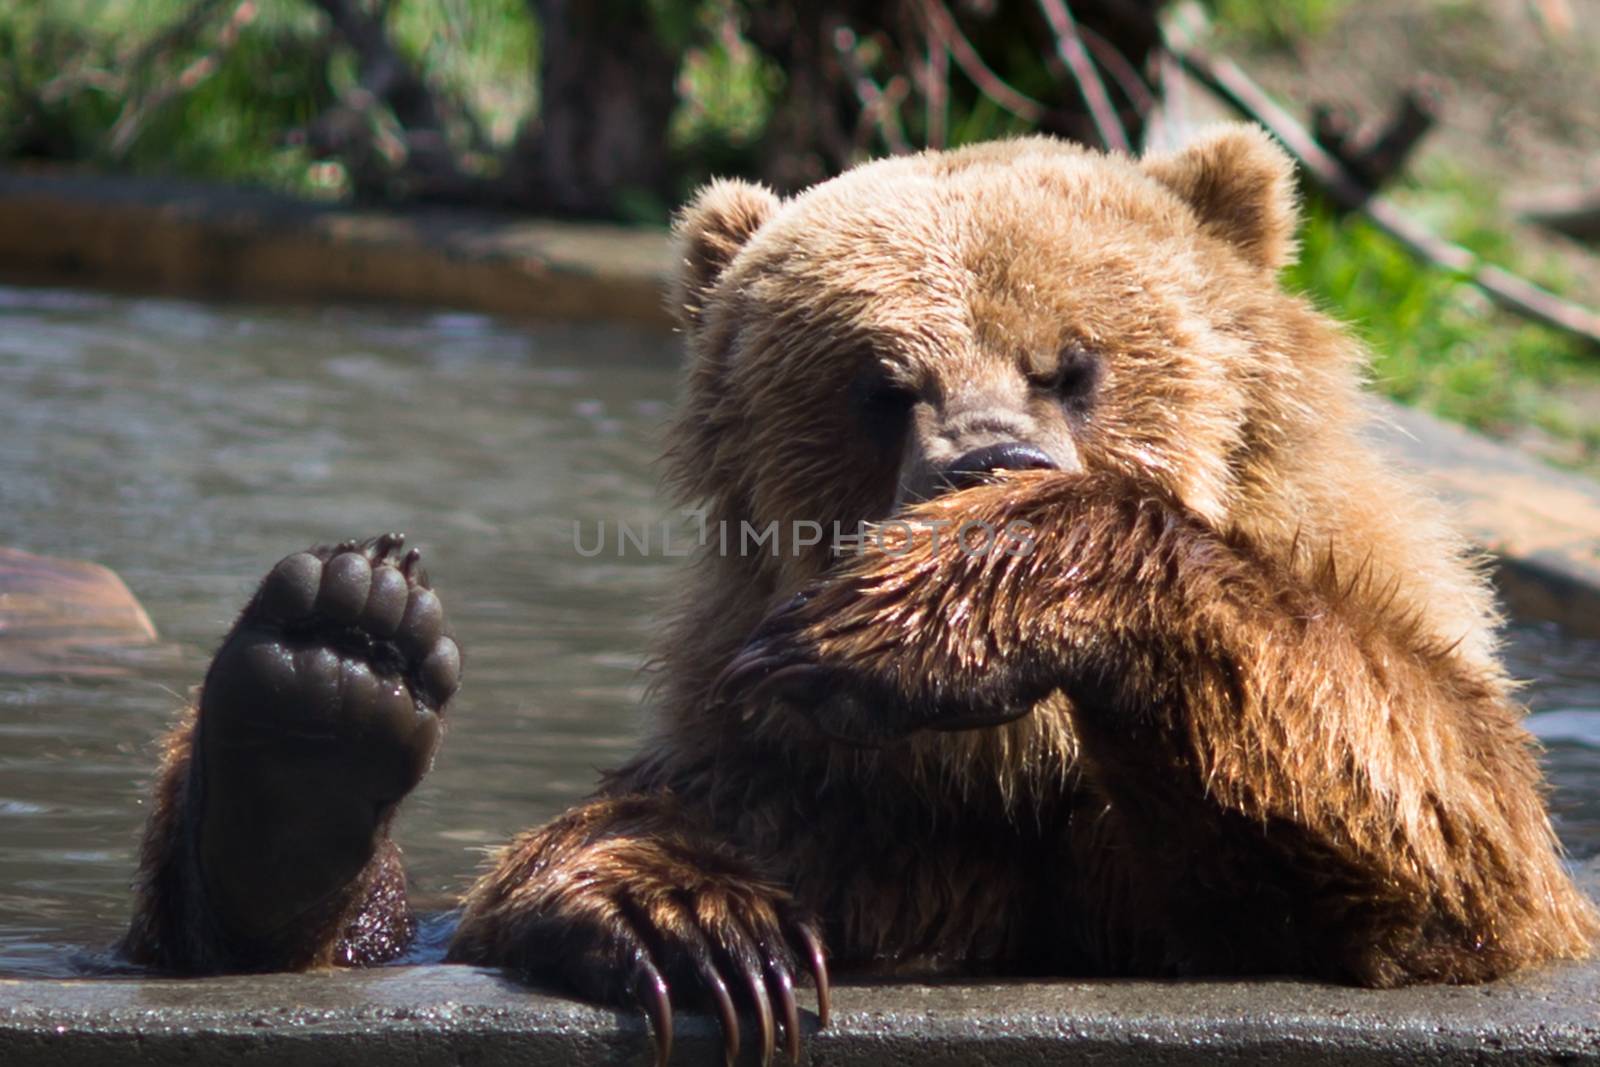 Grizzly bear by toliknik